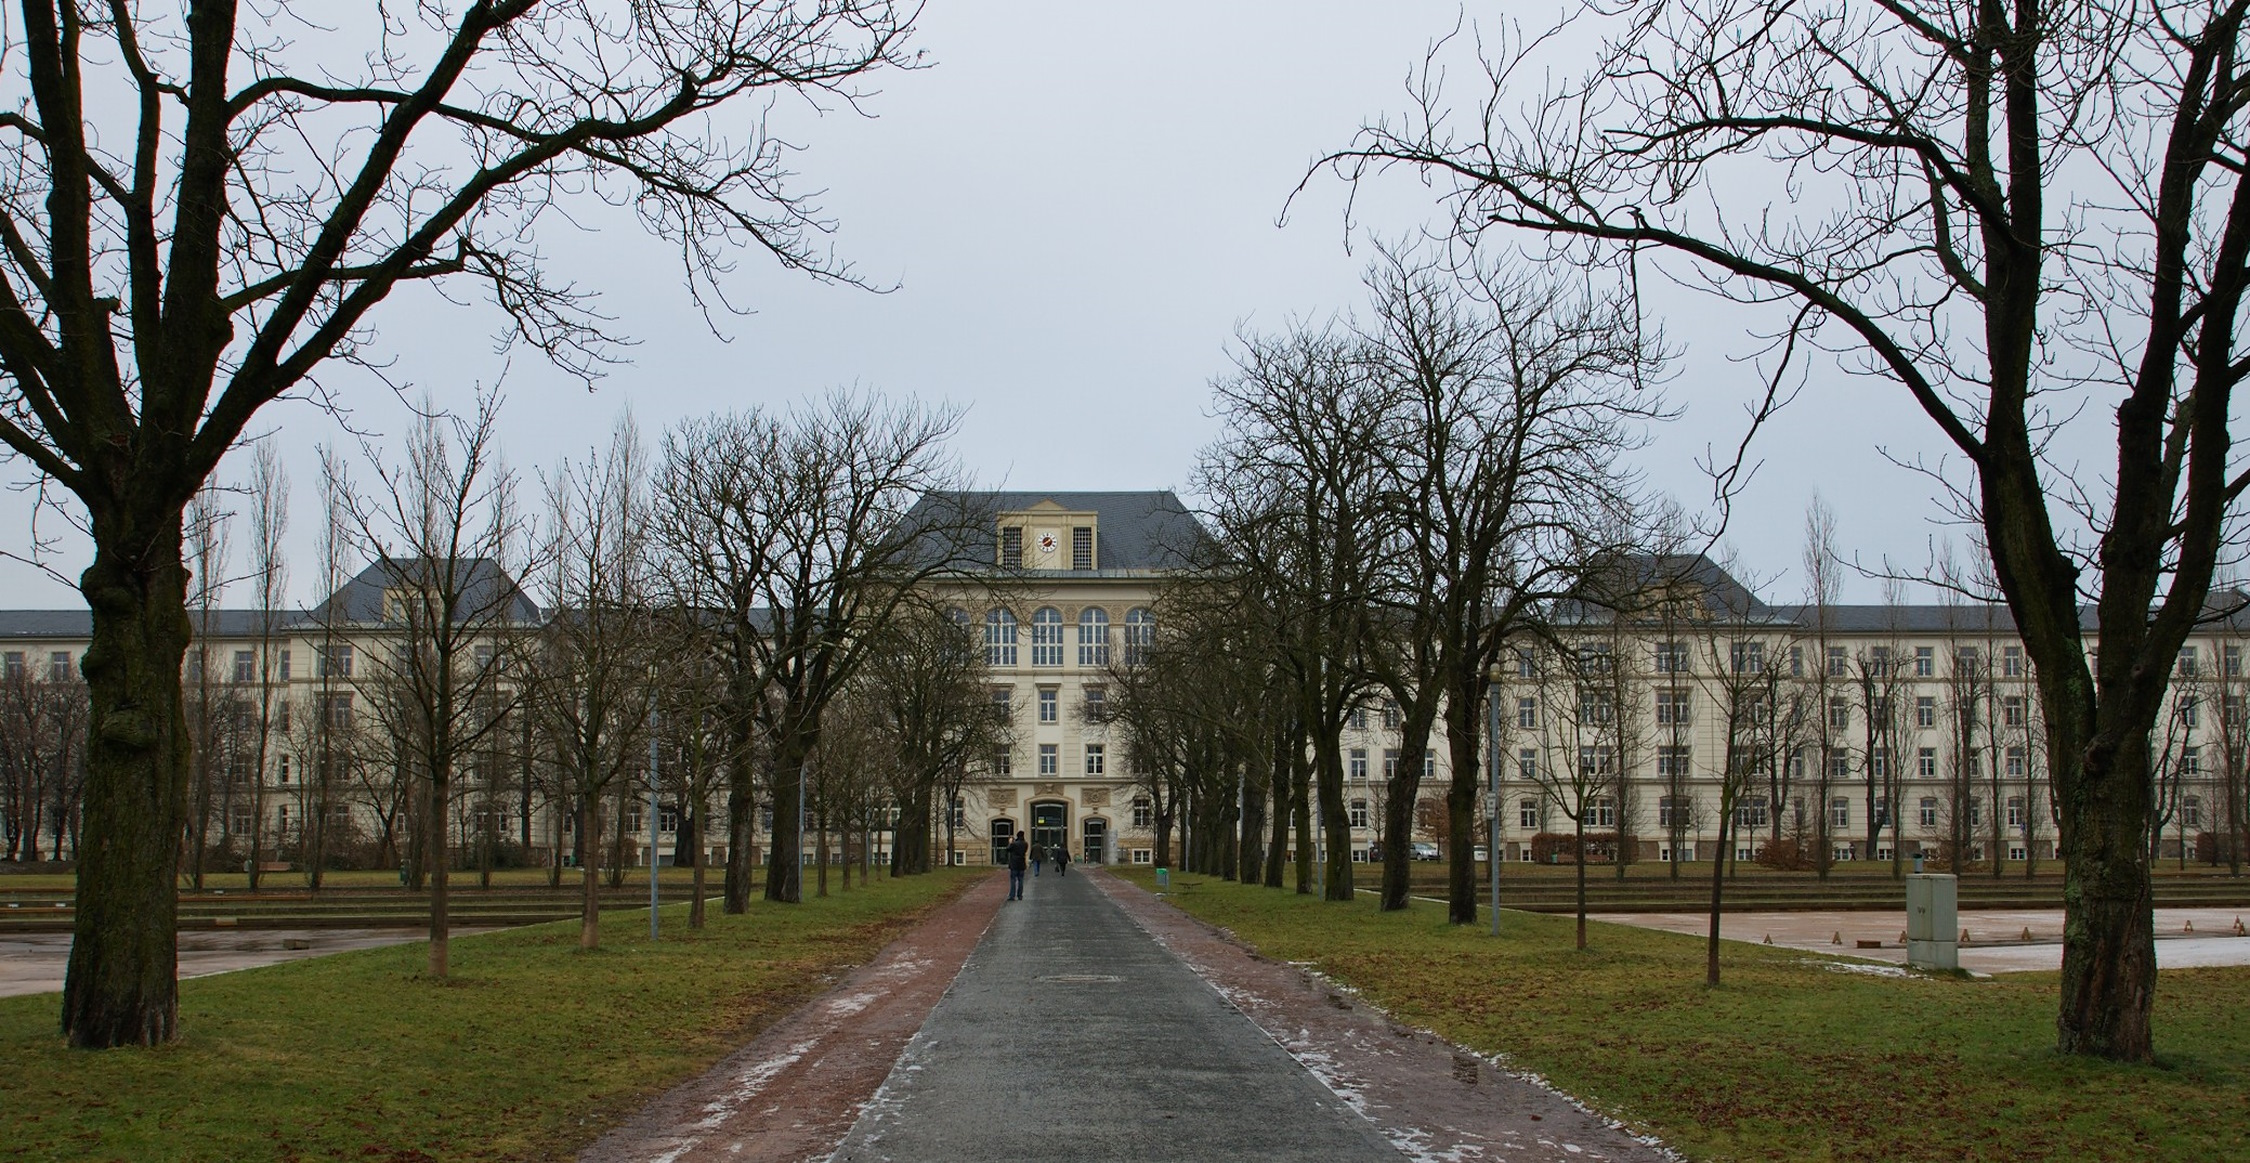 Die Hauptallee zur Kaserne Möckern. Foto: Appaloosa_LE, CC BY-SA 3.0, https://commons.wikimedia.org/w/index.php?curid=53017136